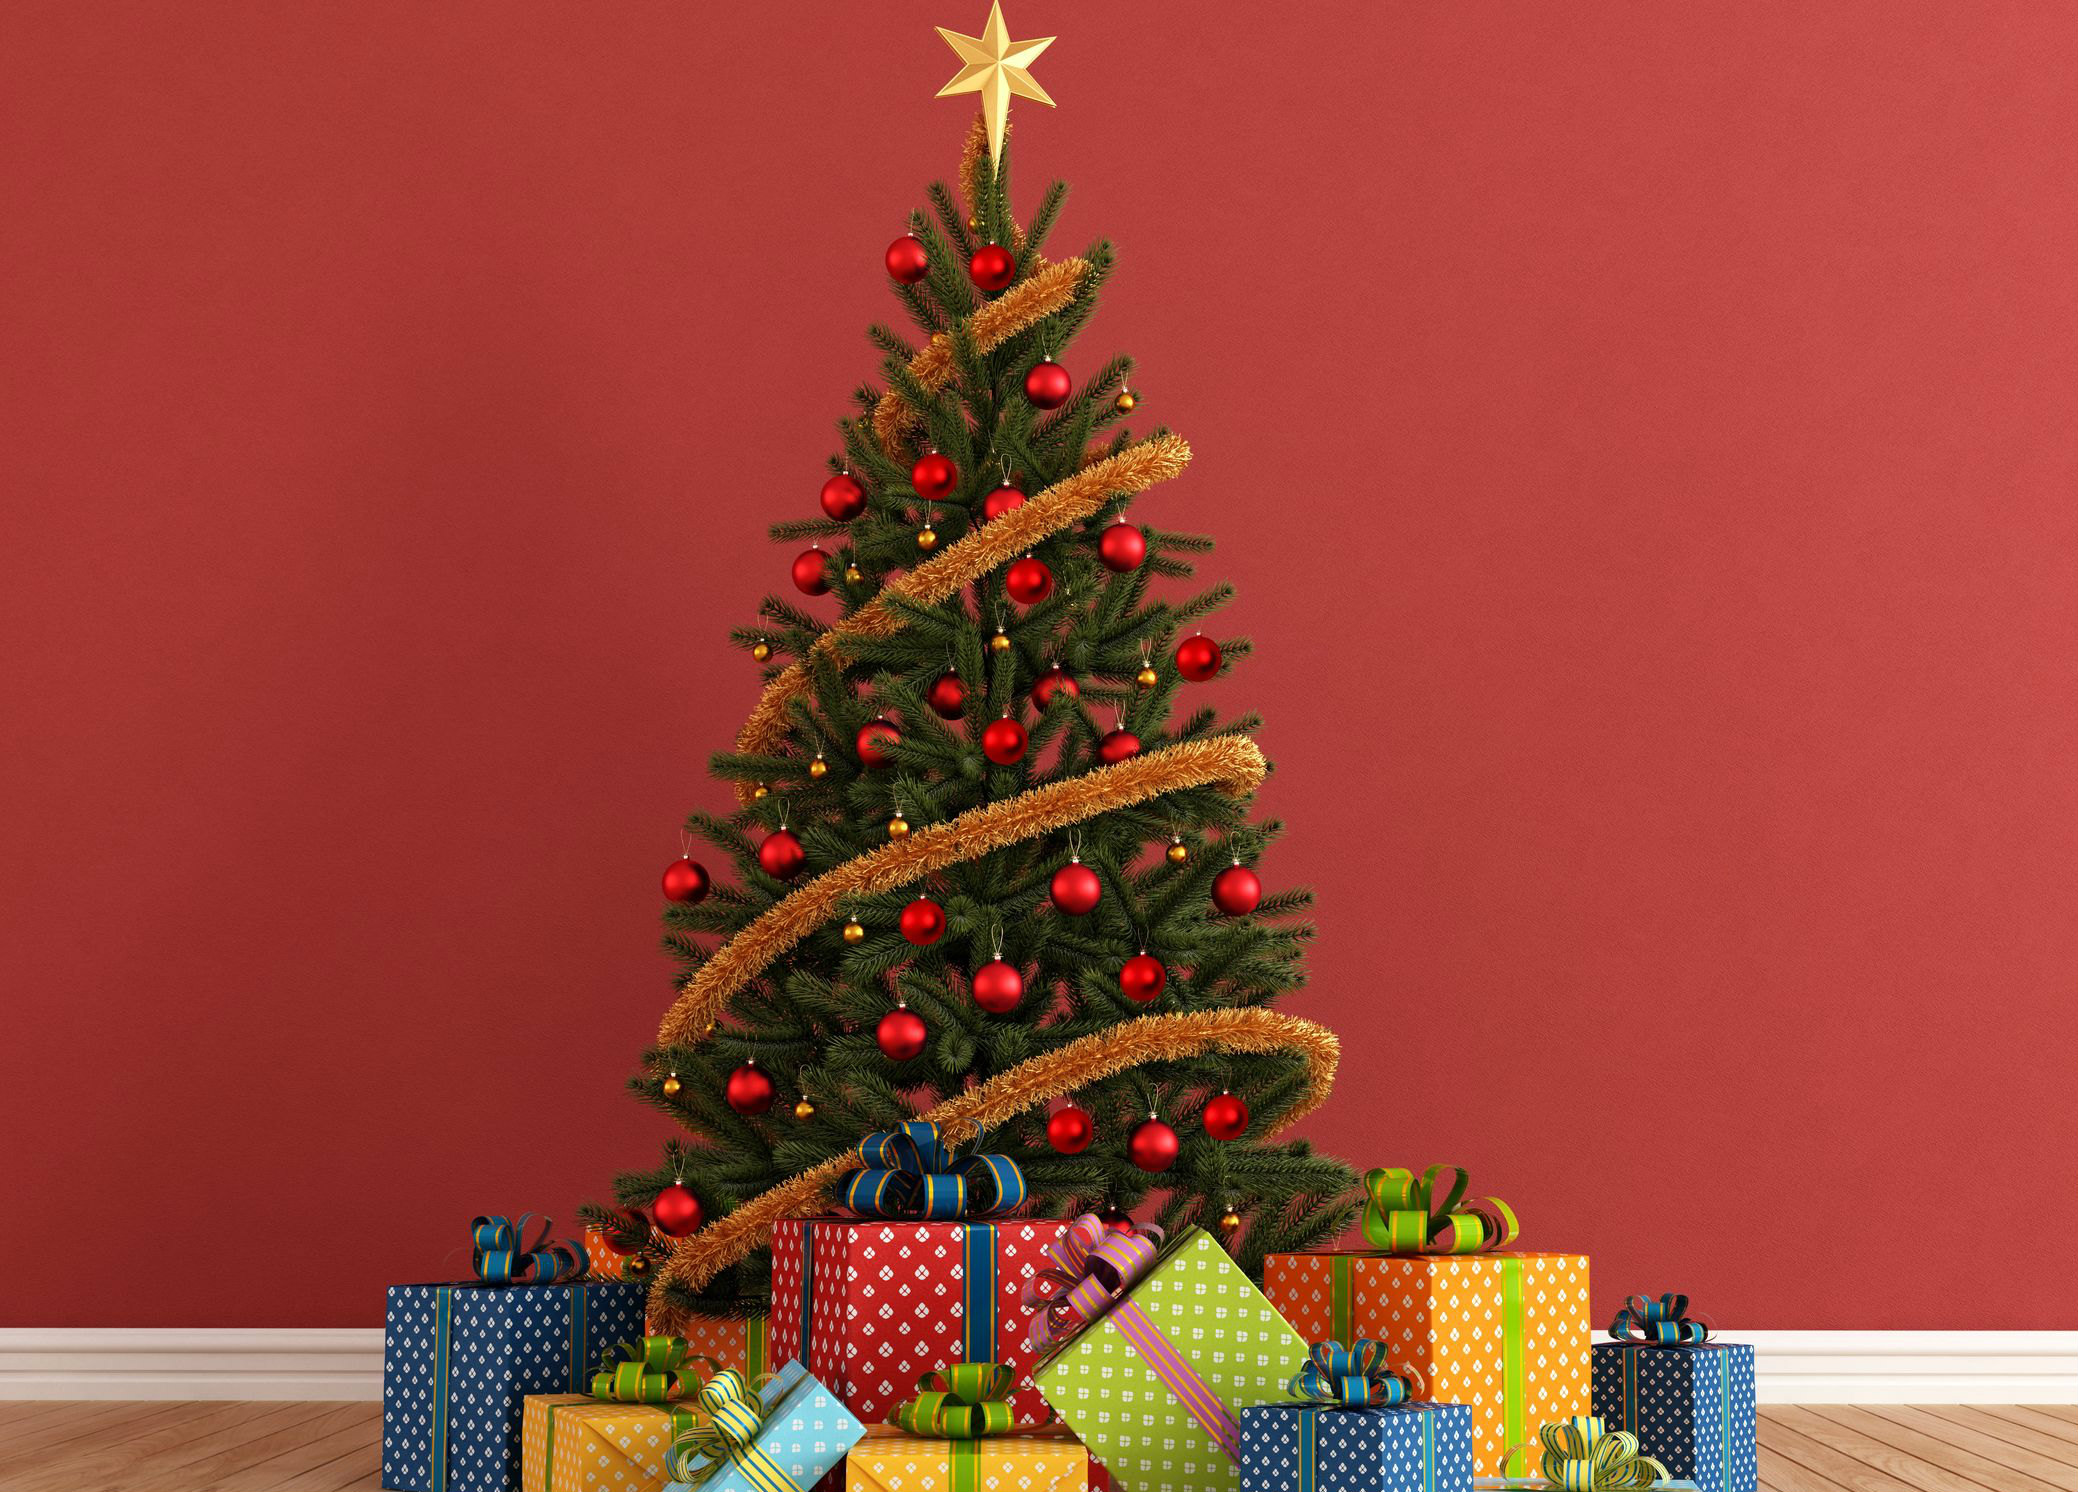 How to Make a Smart Christmas Tree